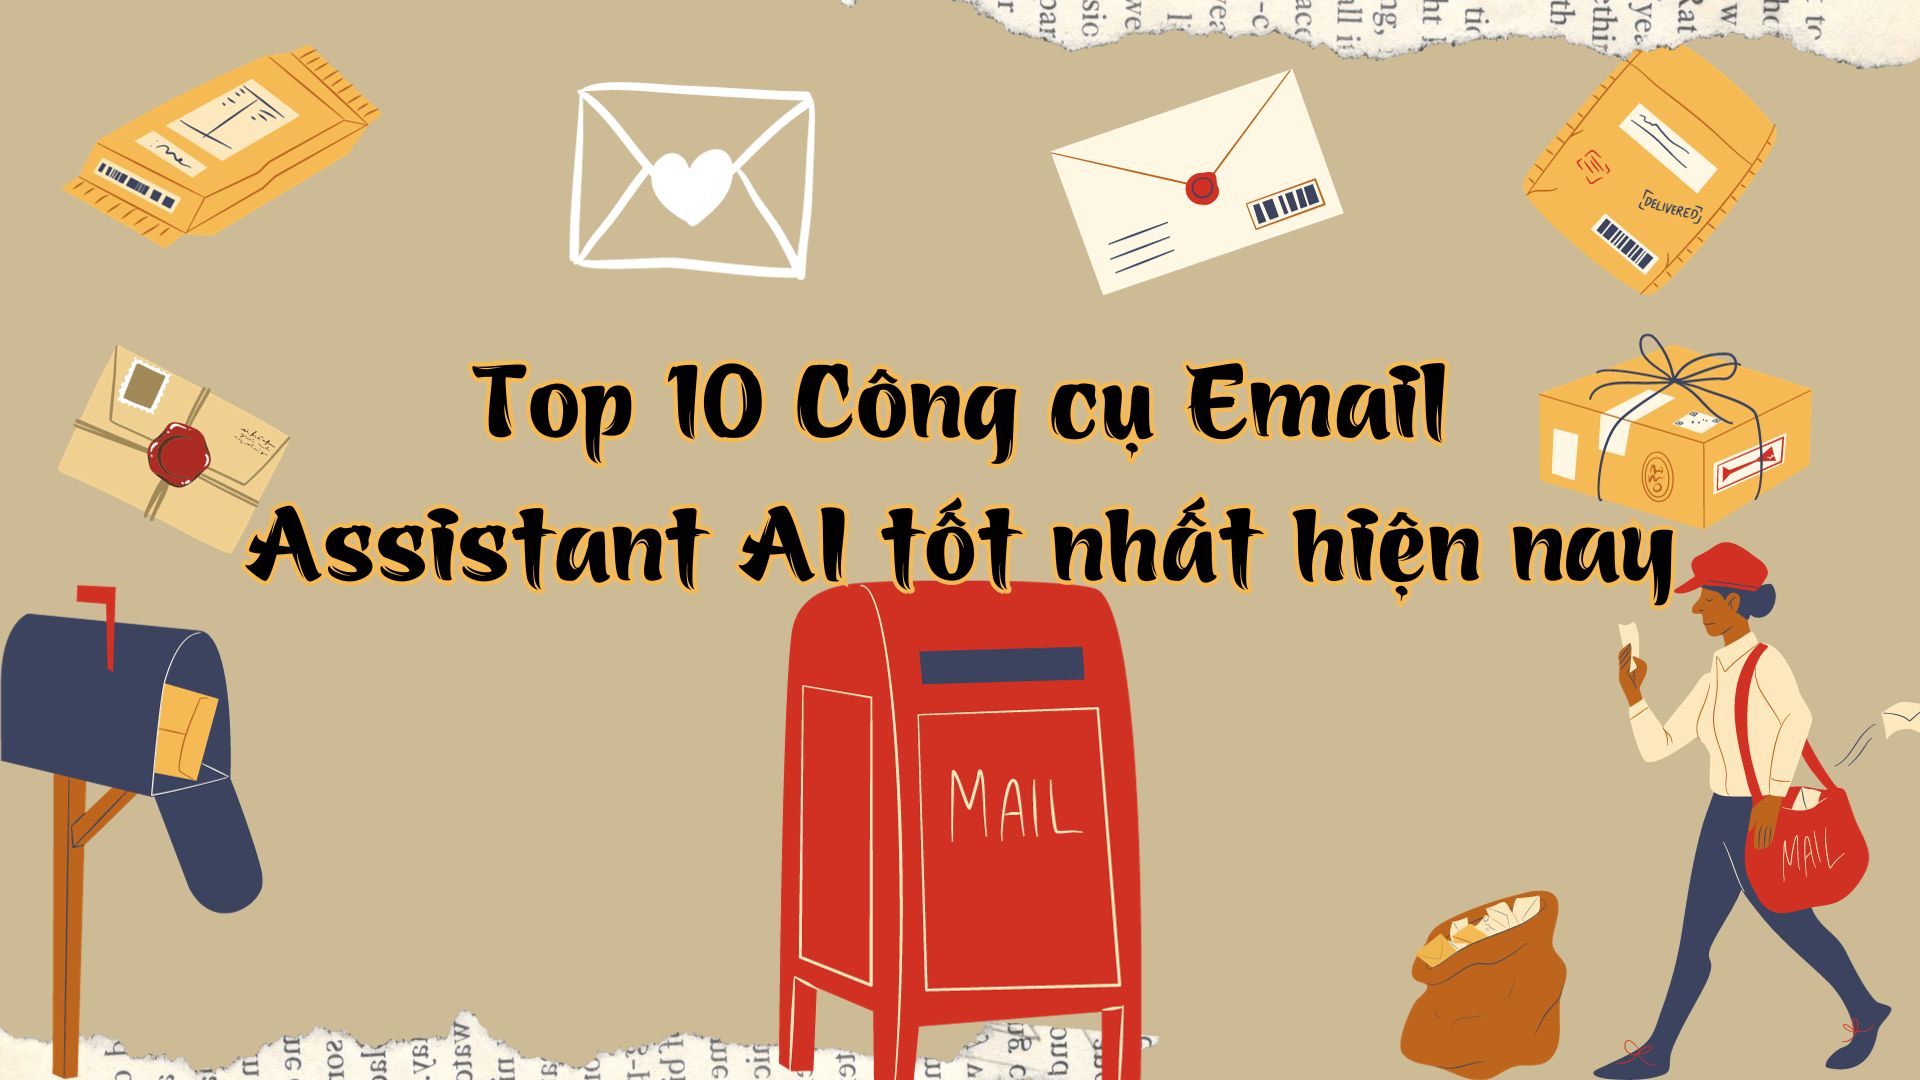 Top 10 Công cụ Email Assistant AI tốt nhất hiện nay